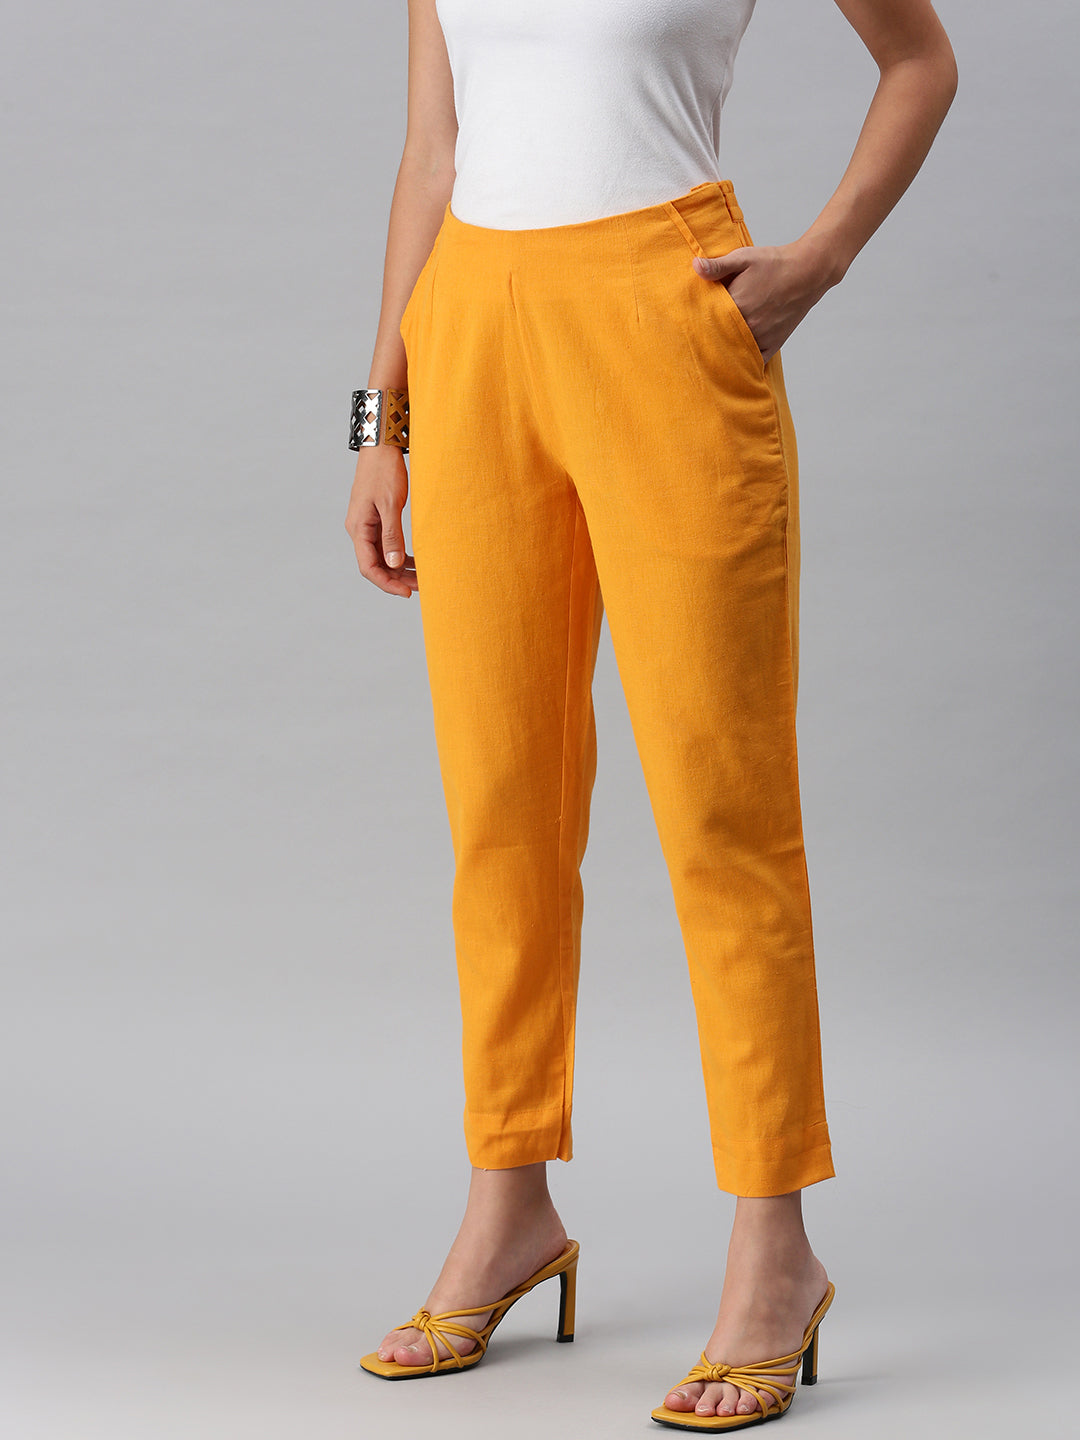 Jcasho-Women comfort stretchable cotton lycra pants/trousers, Yellow colour.